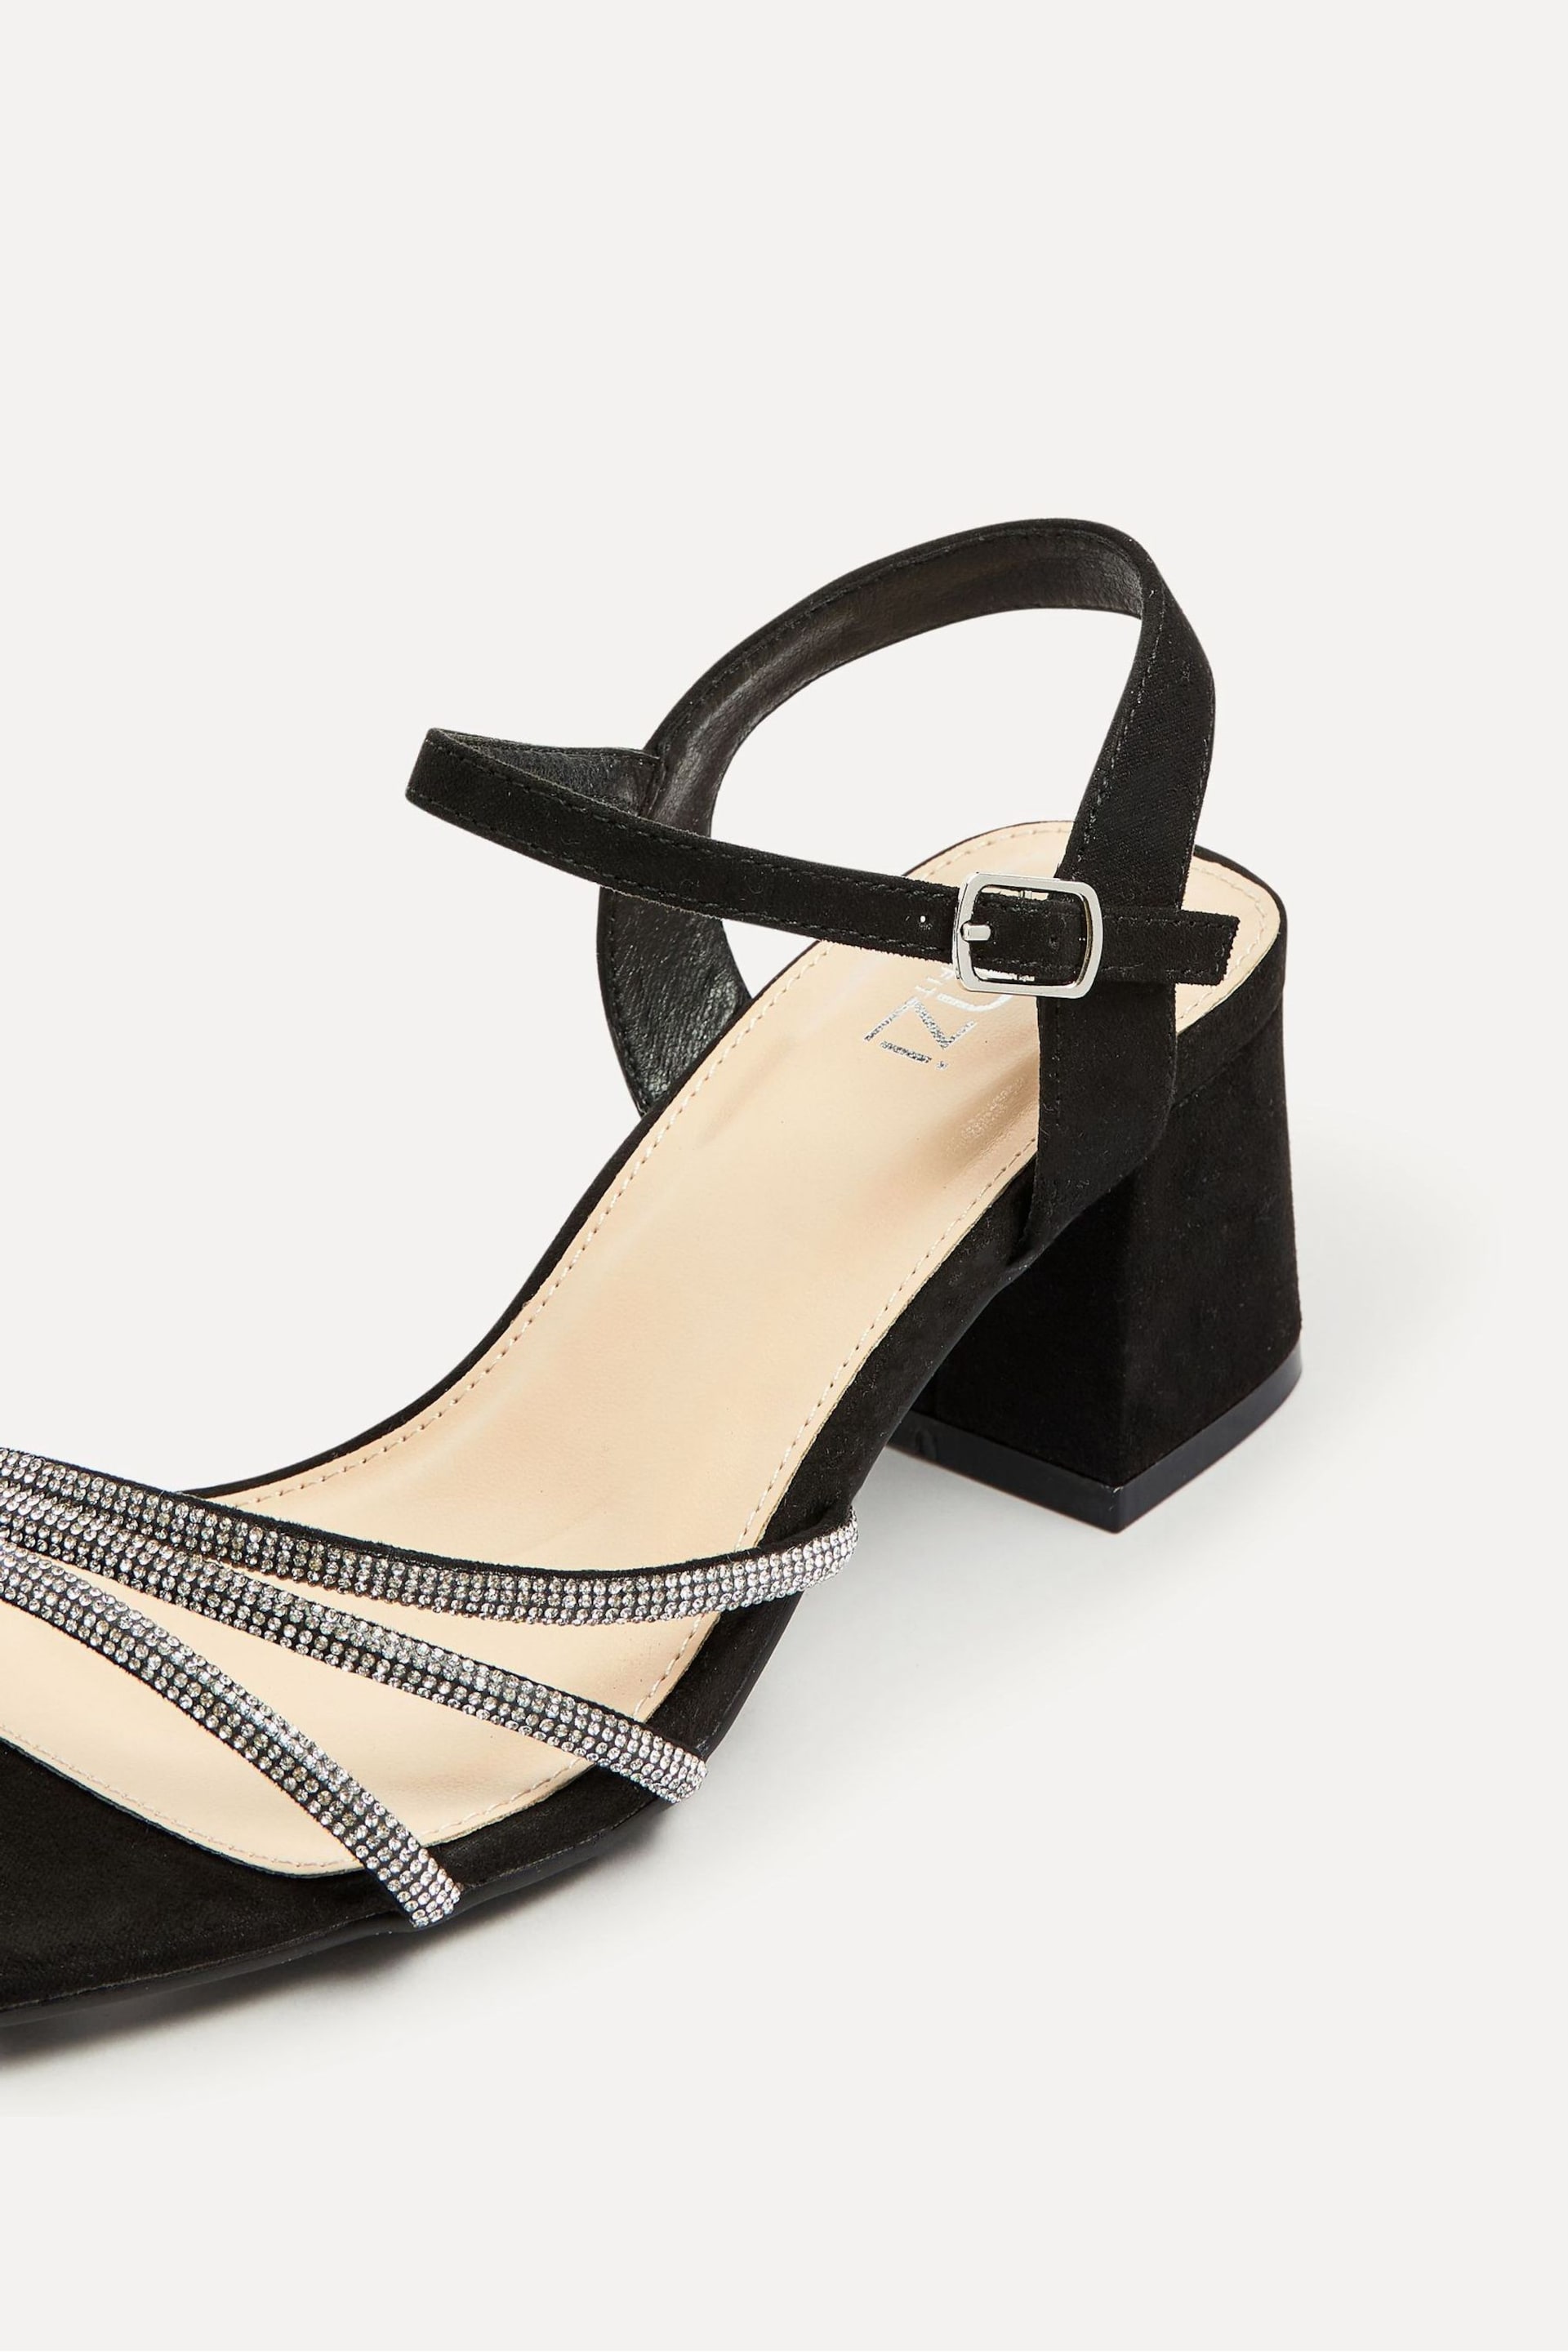 Linzi Black Wide Fit Mariah Embellished Heeled Sandals - Image 5 of 5